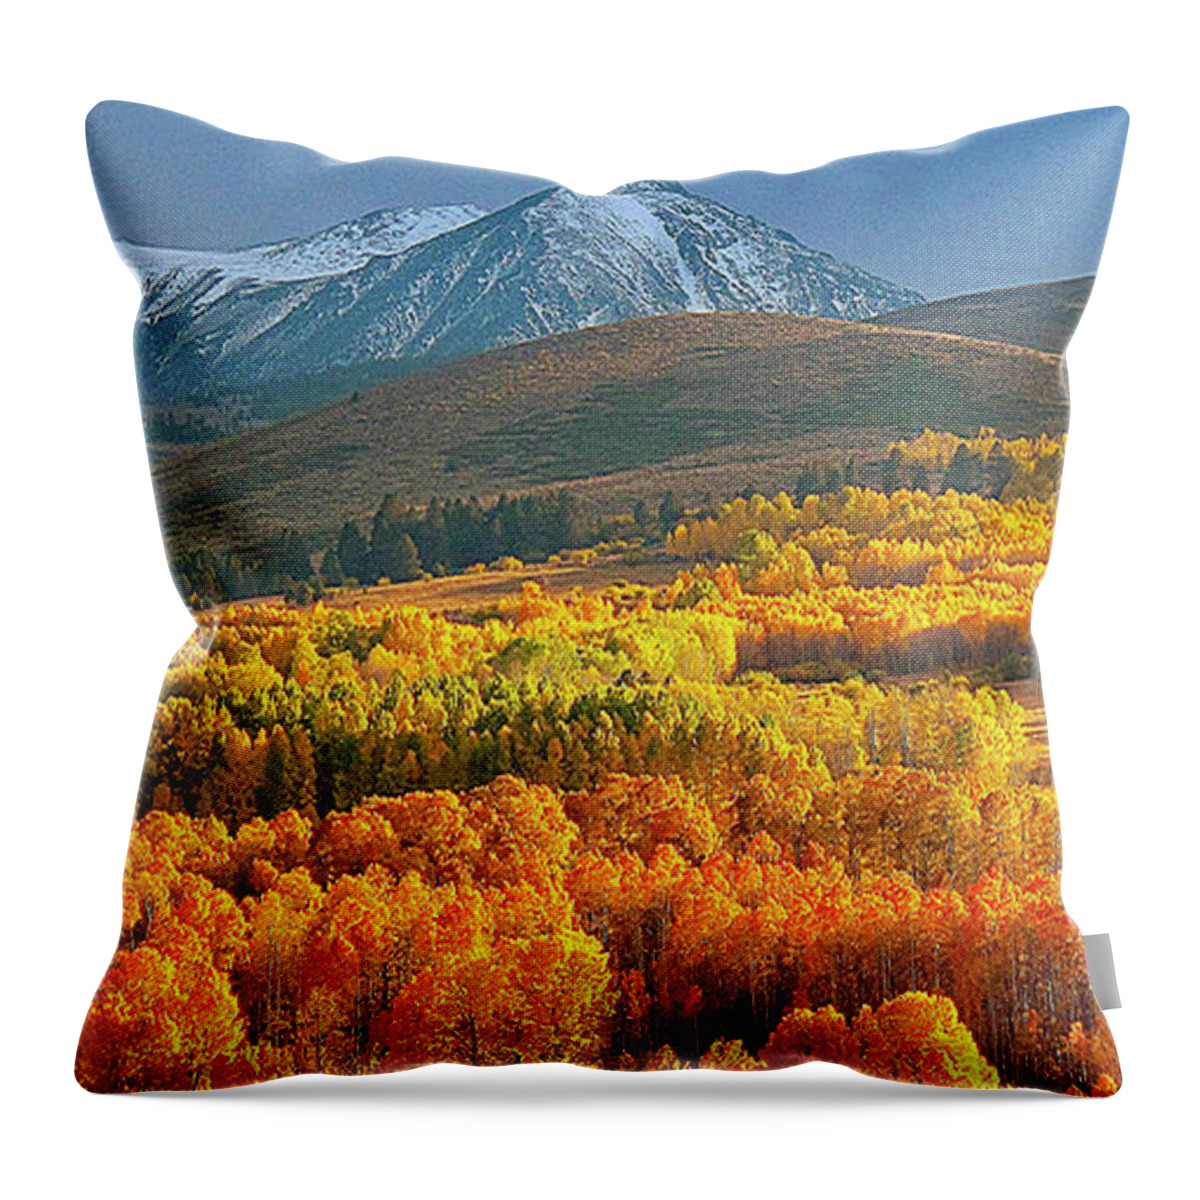 Aspen Grove Throw Pillow featuring the photograph Evening Aspen by L J Oakes